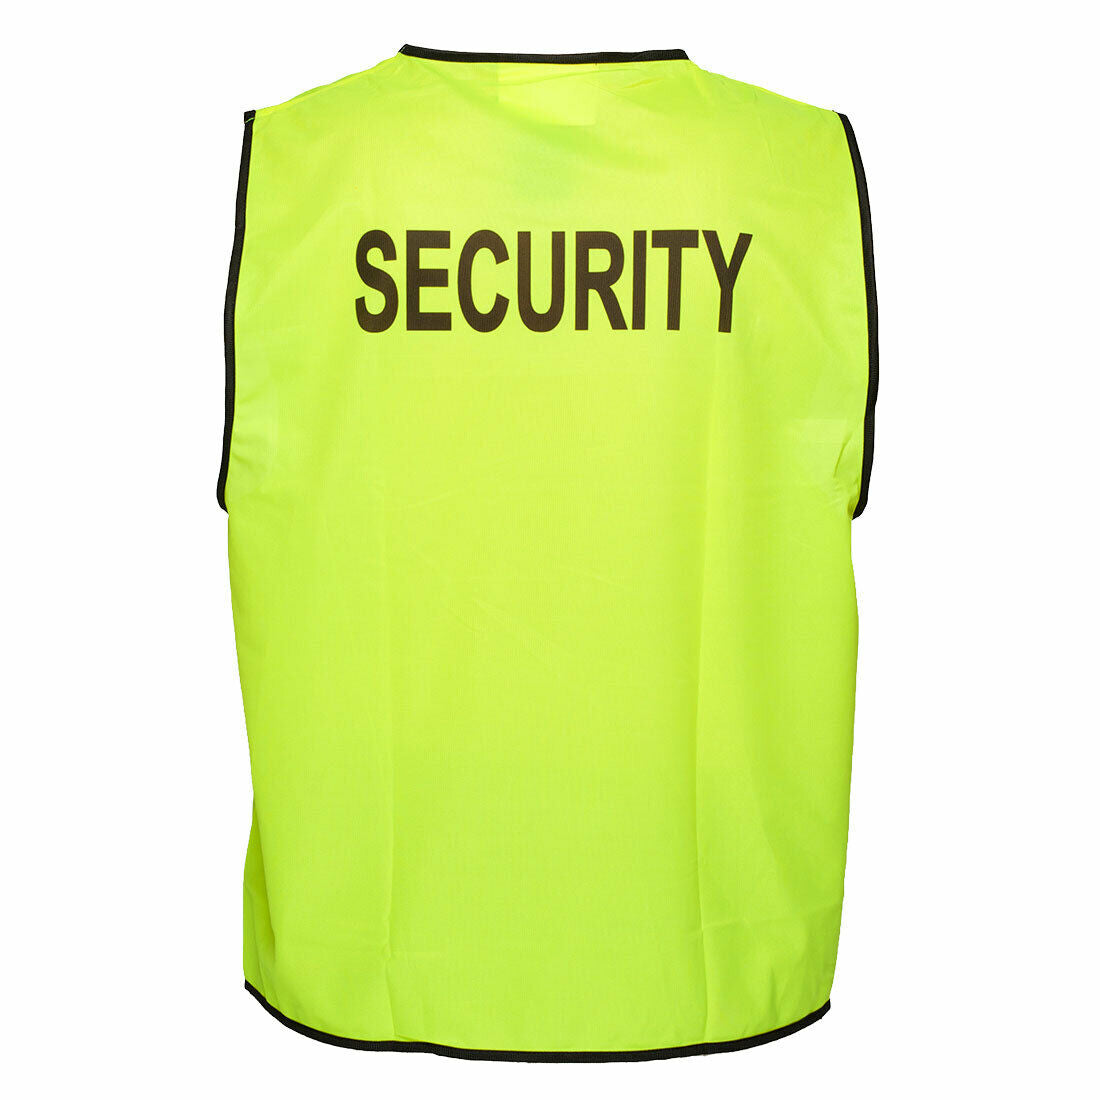 Portwest Security Hi-Vis Vest Class D Reflective Tape Work Safety MV122